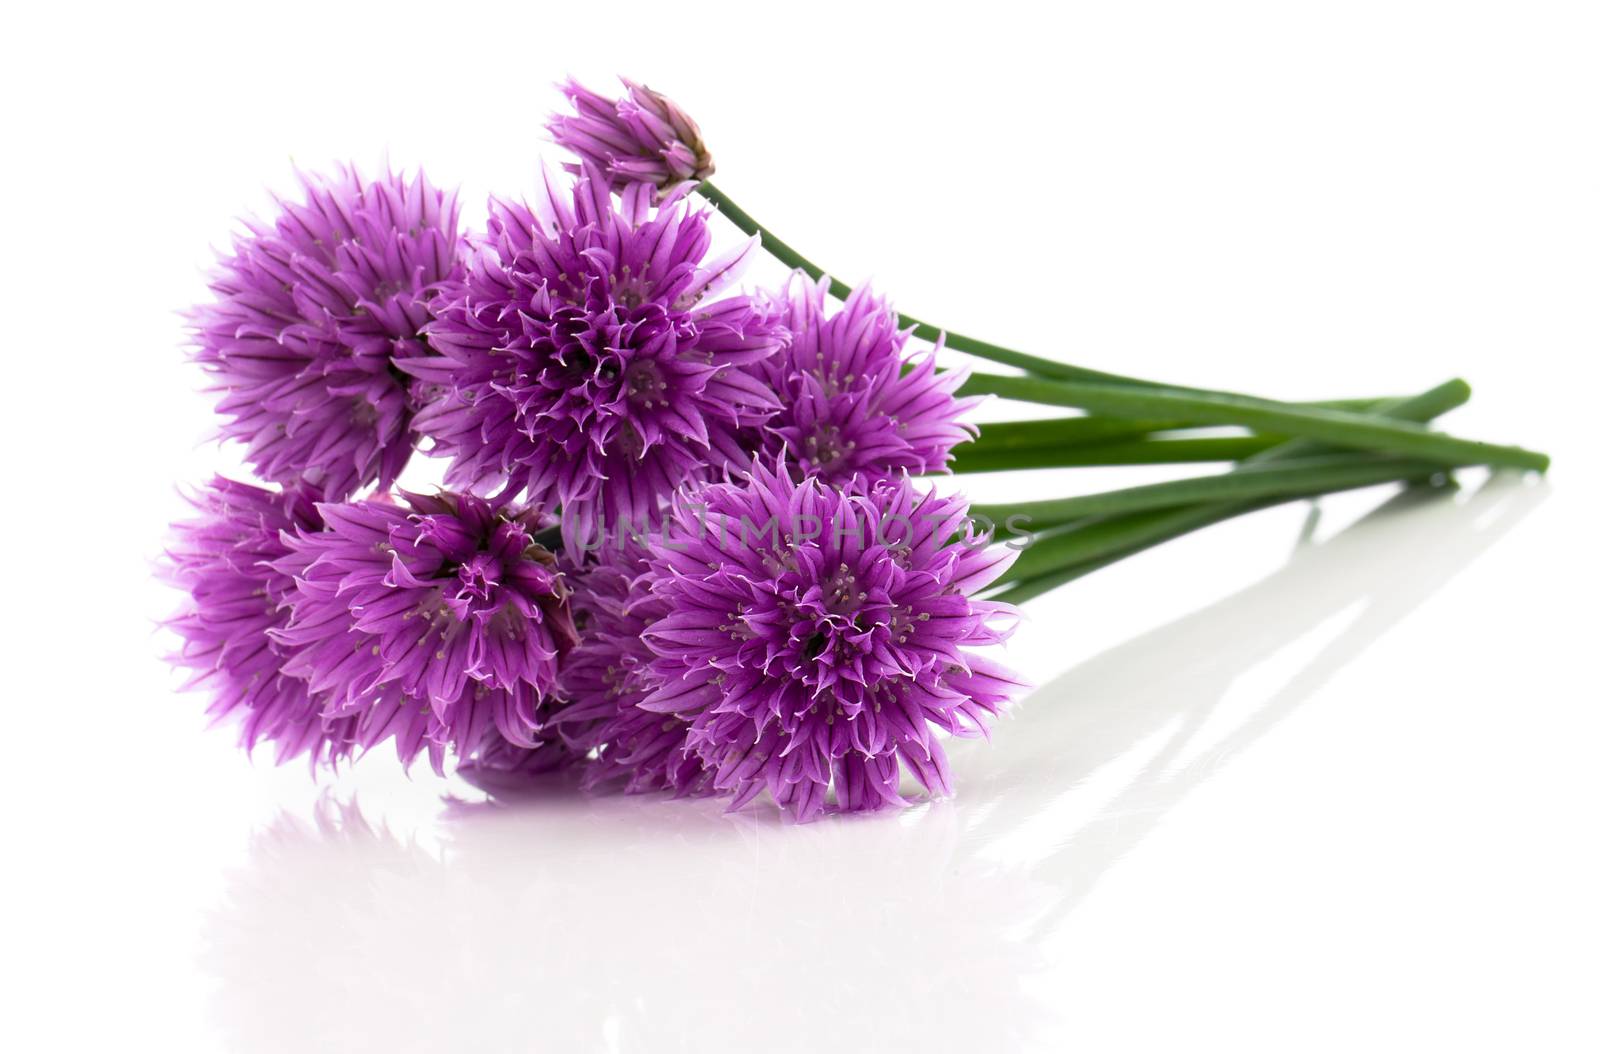 purple allium onion flower isolated on white by motorolka